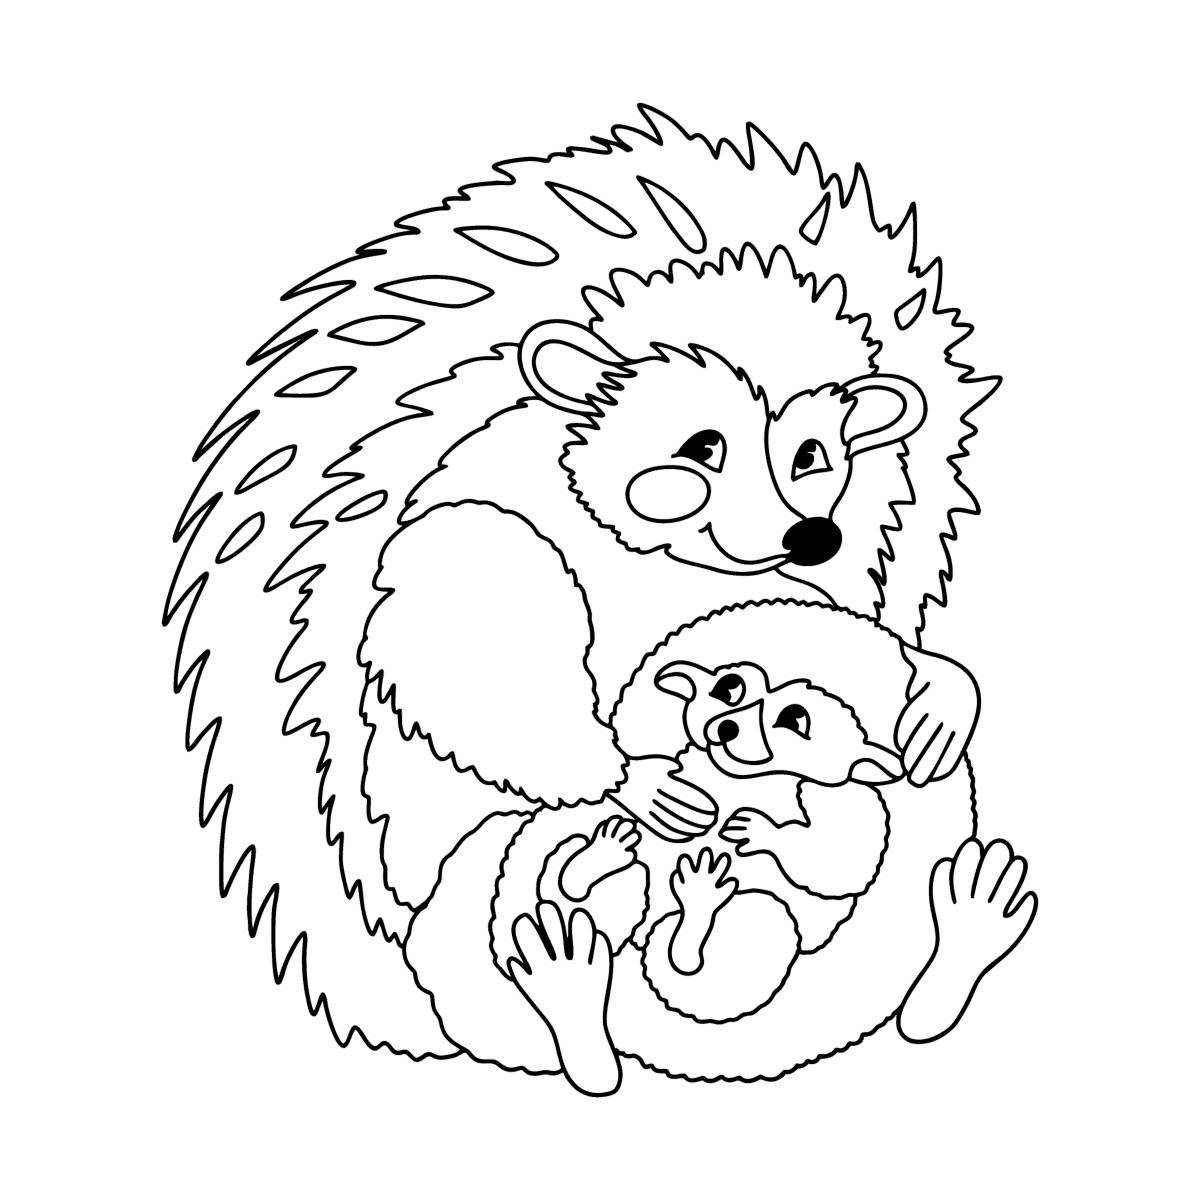 Fun coloring hedgehog and teddy bear